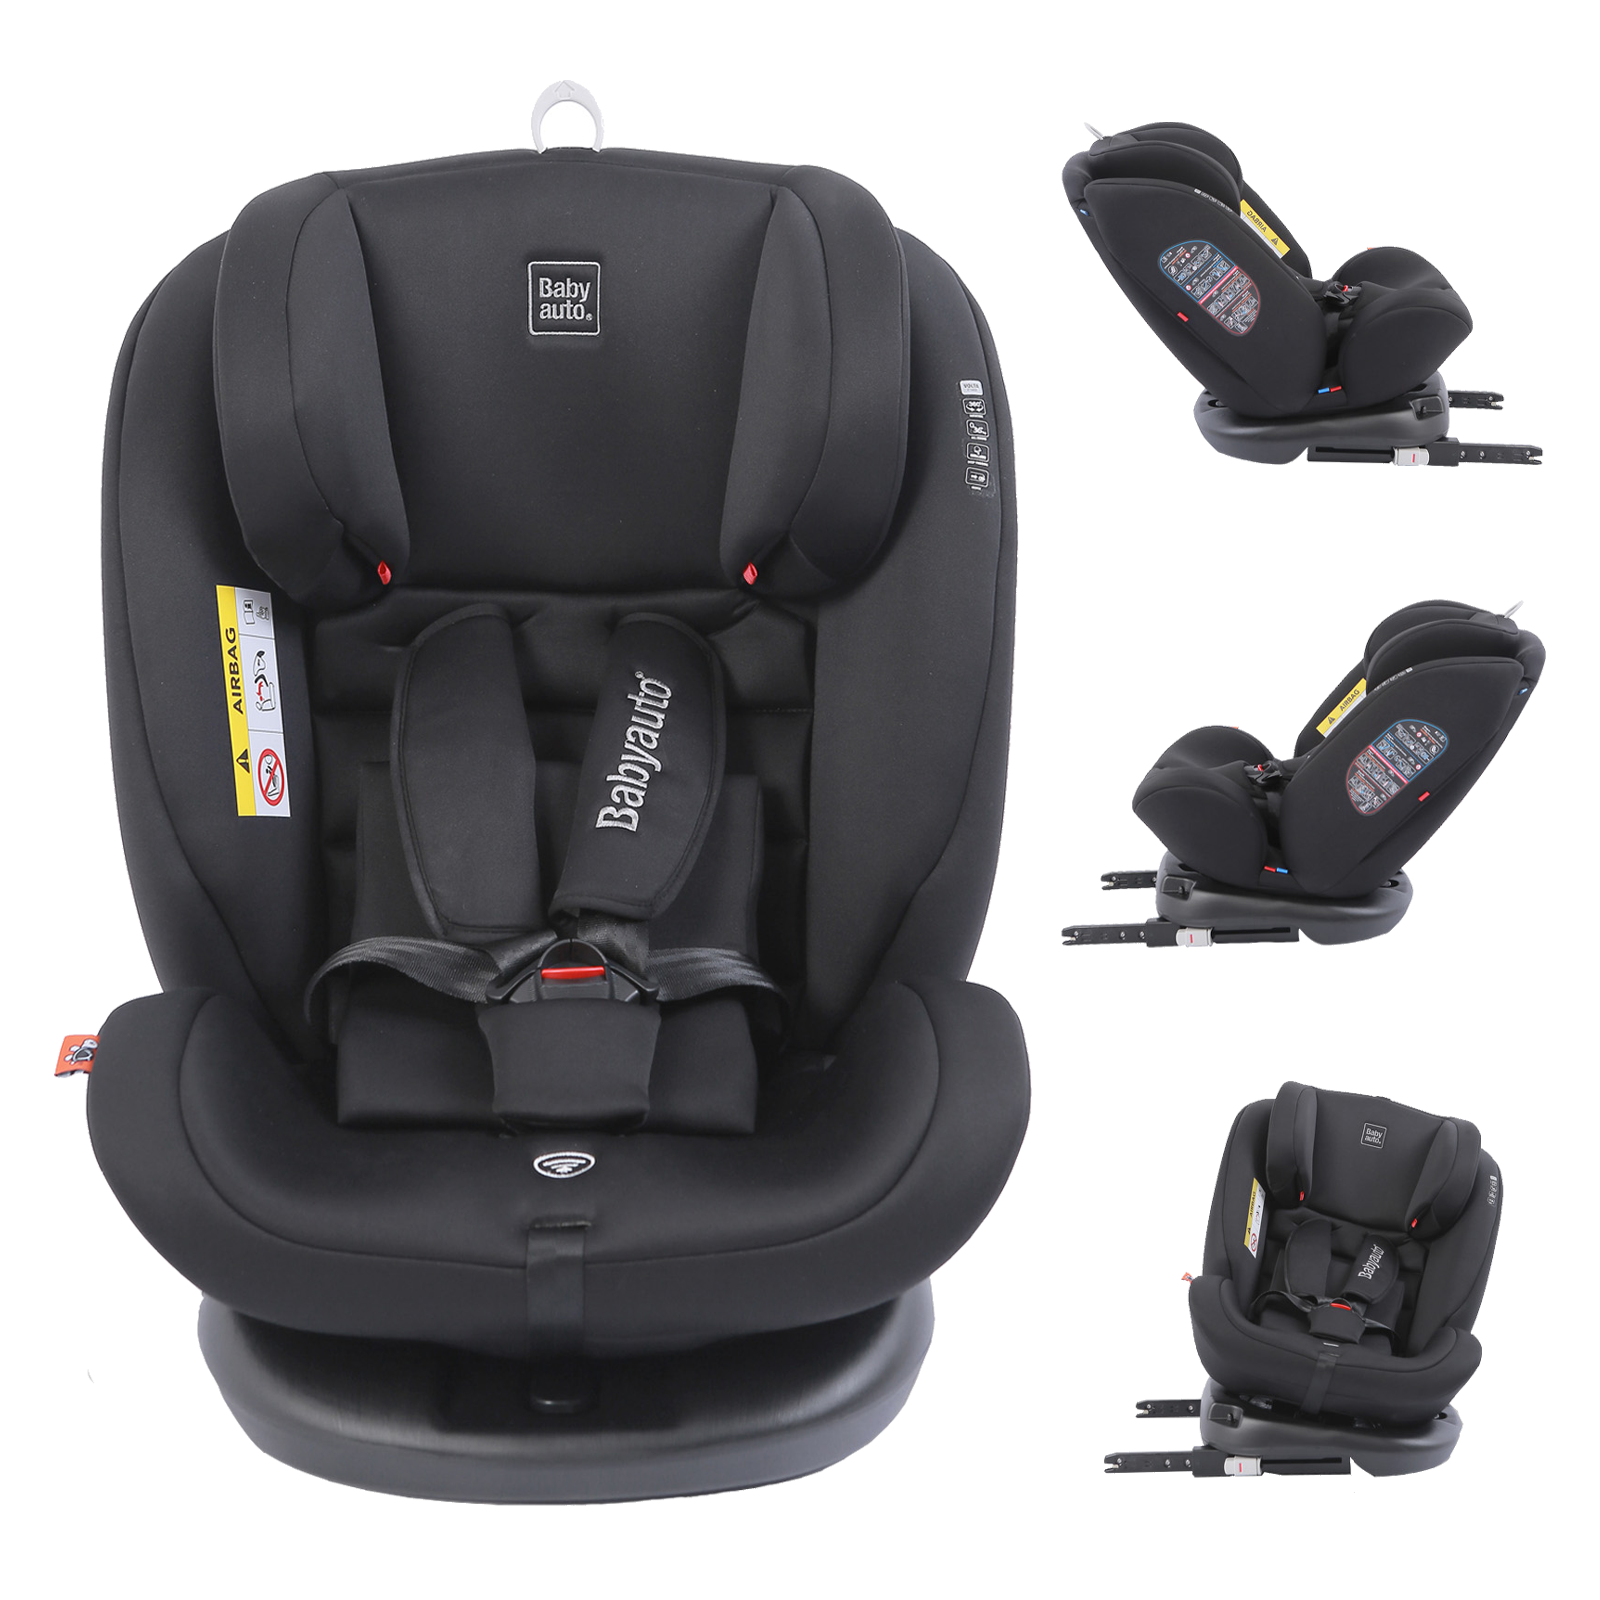 Babyauto Volta Spin Rotate Group 0+1/2/3 ISOFIX Car Seat - Black